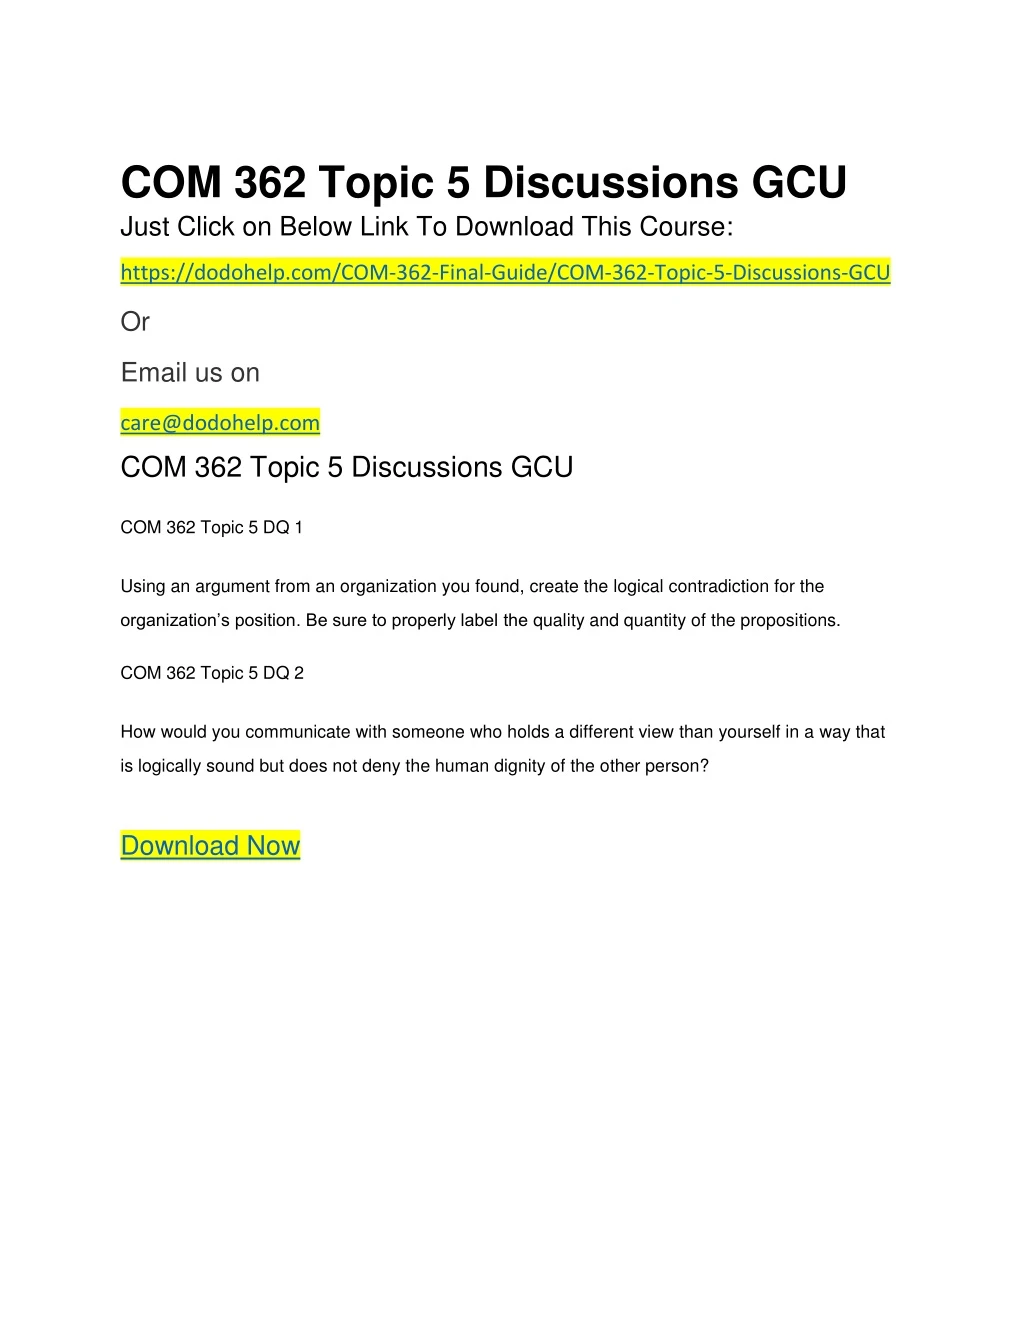 com 362 topic 5 discussions gcu just click